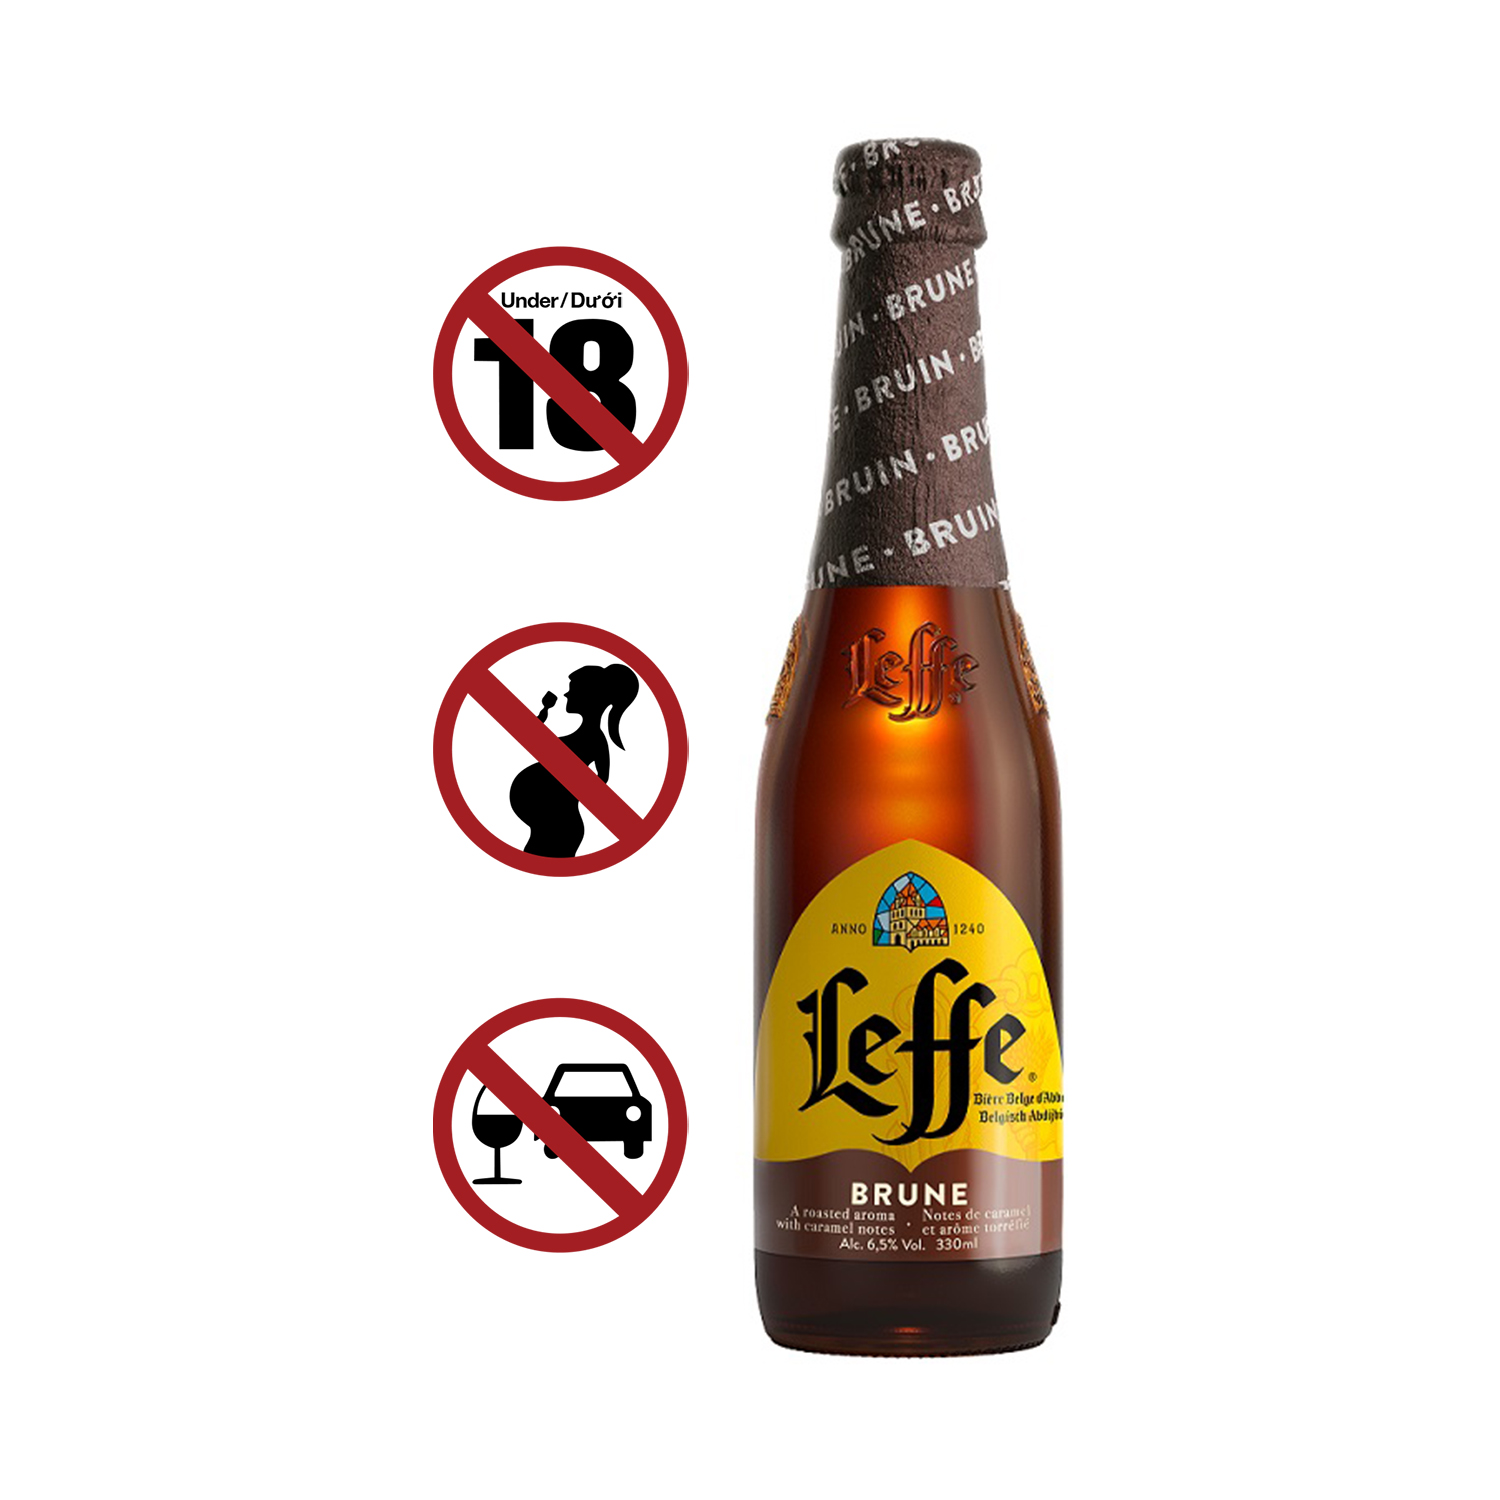 Leffe Brown Beer 6.5% Bottle (330ml)